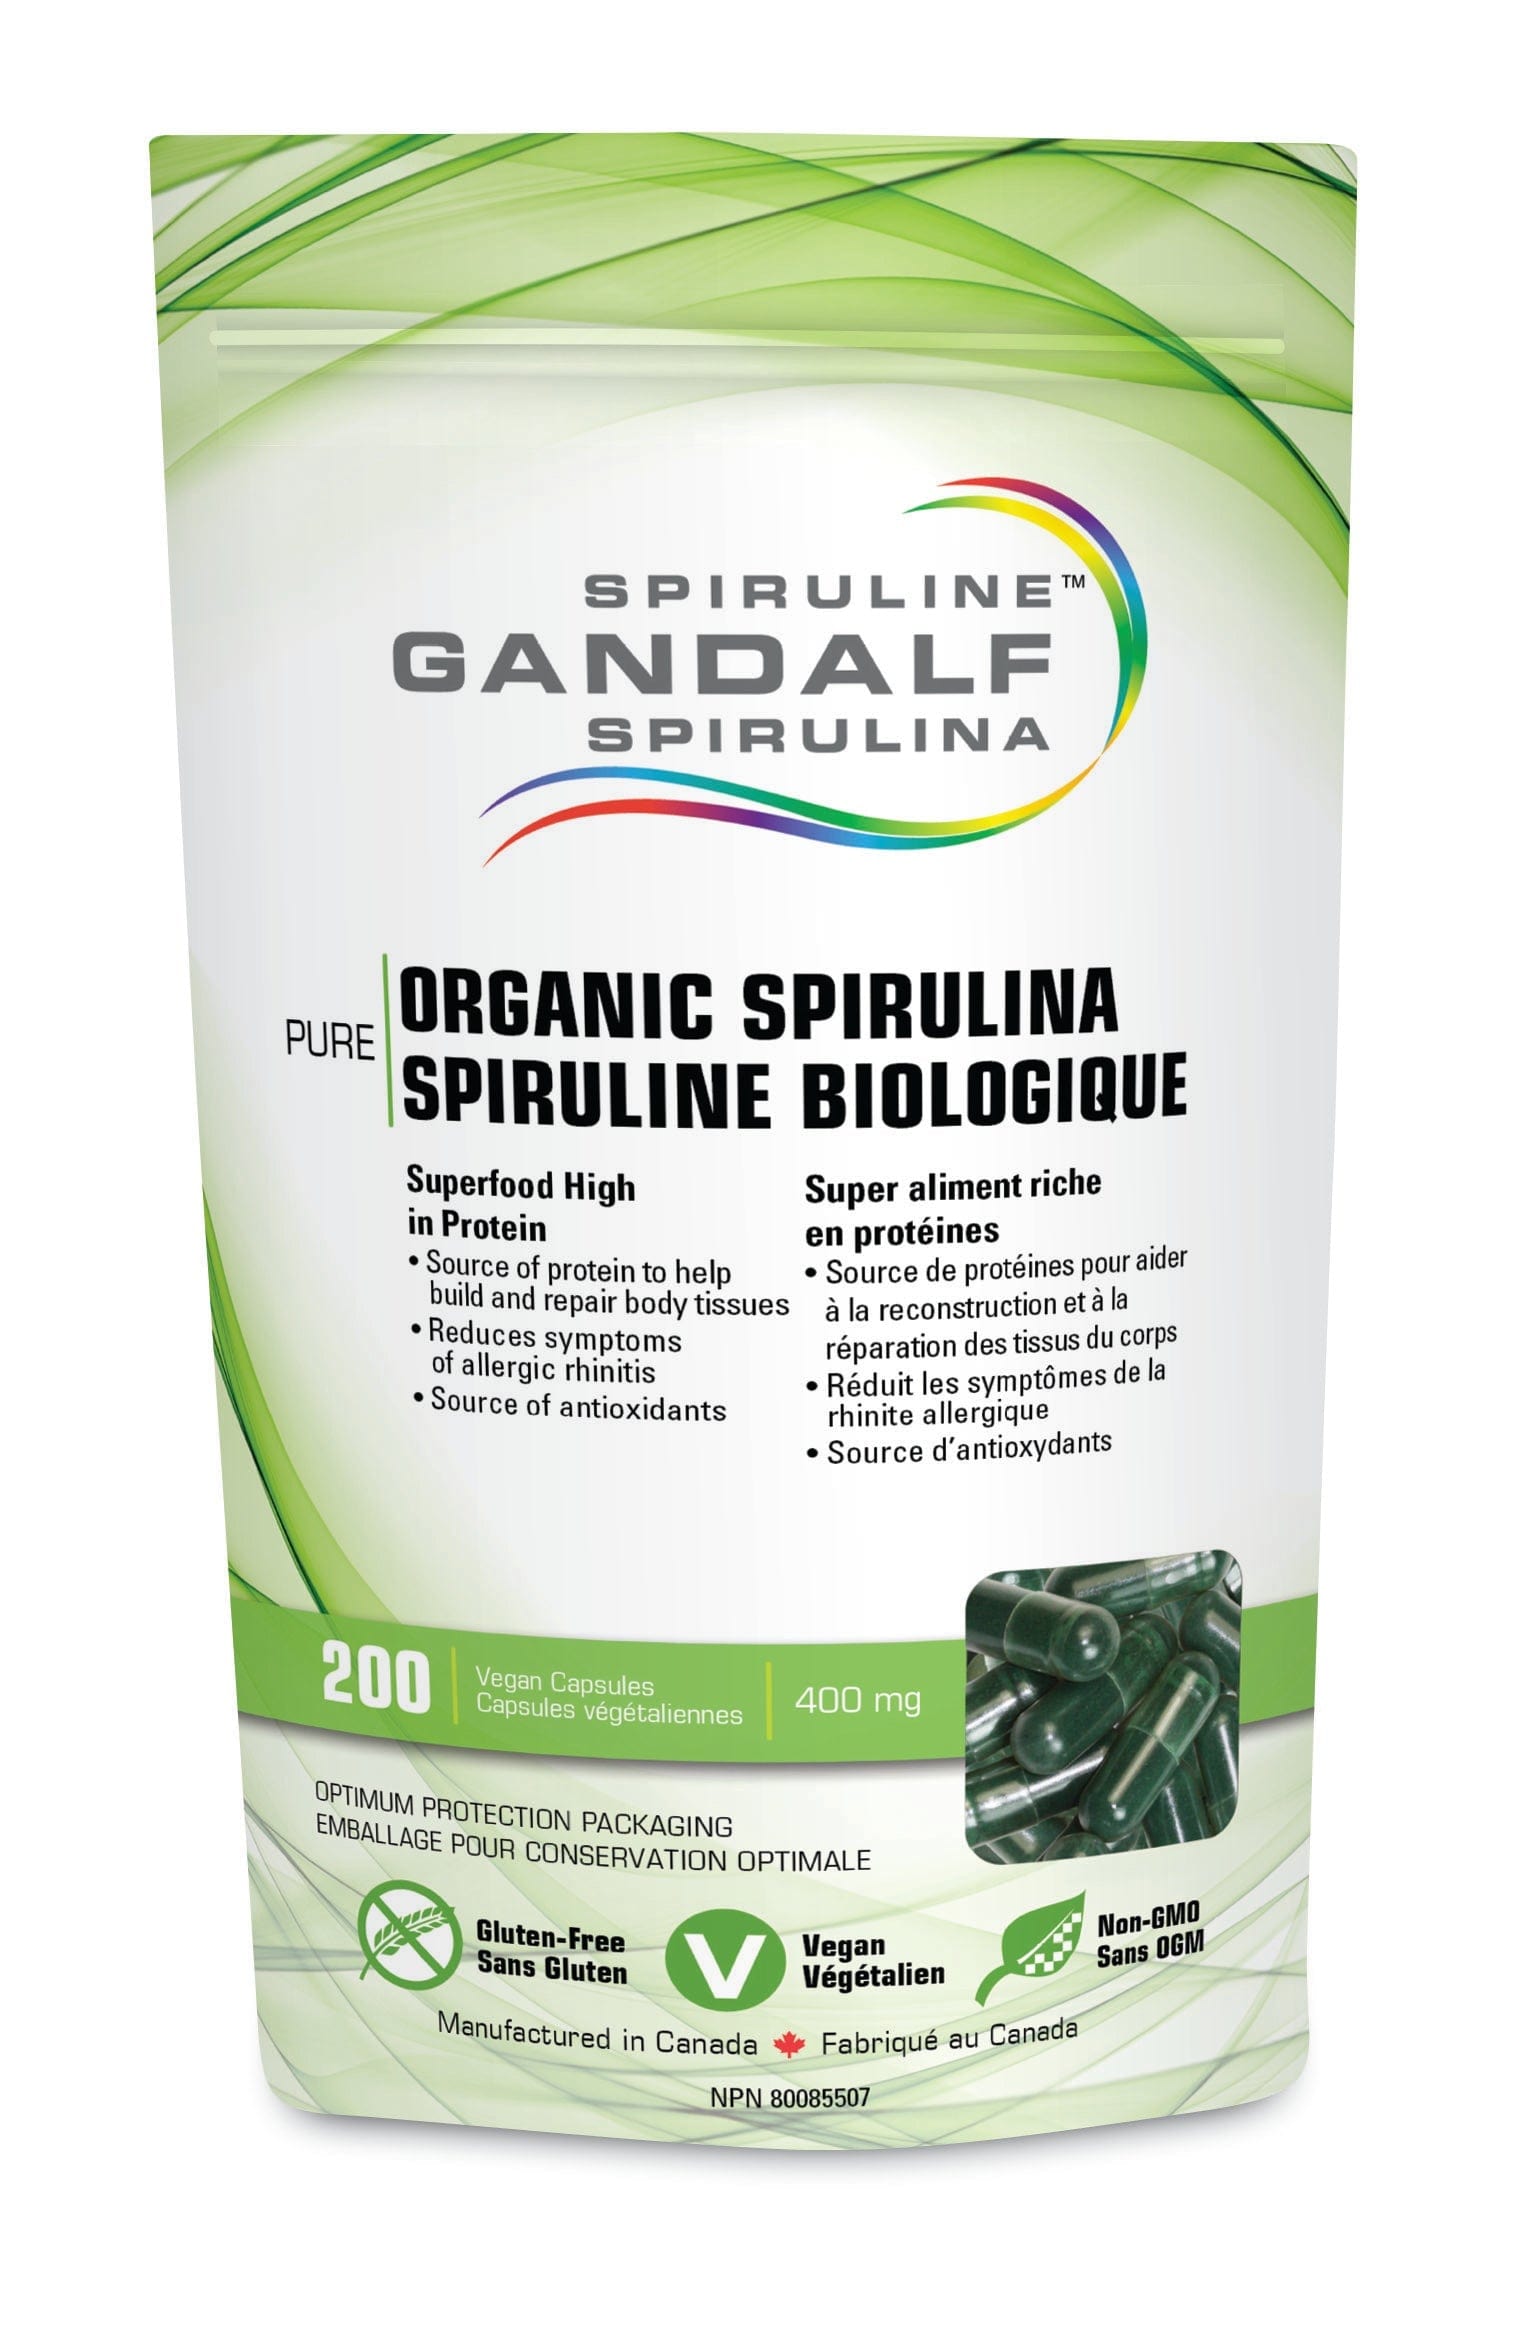 GANDALF Suppléments Spiruline bio 400mg 200vcaps